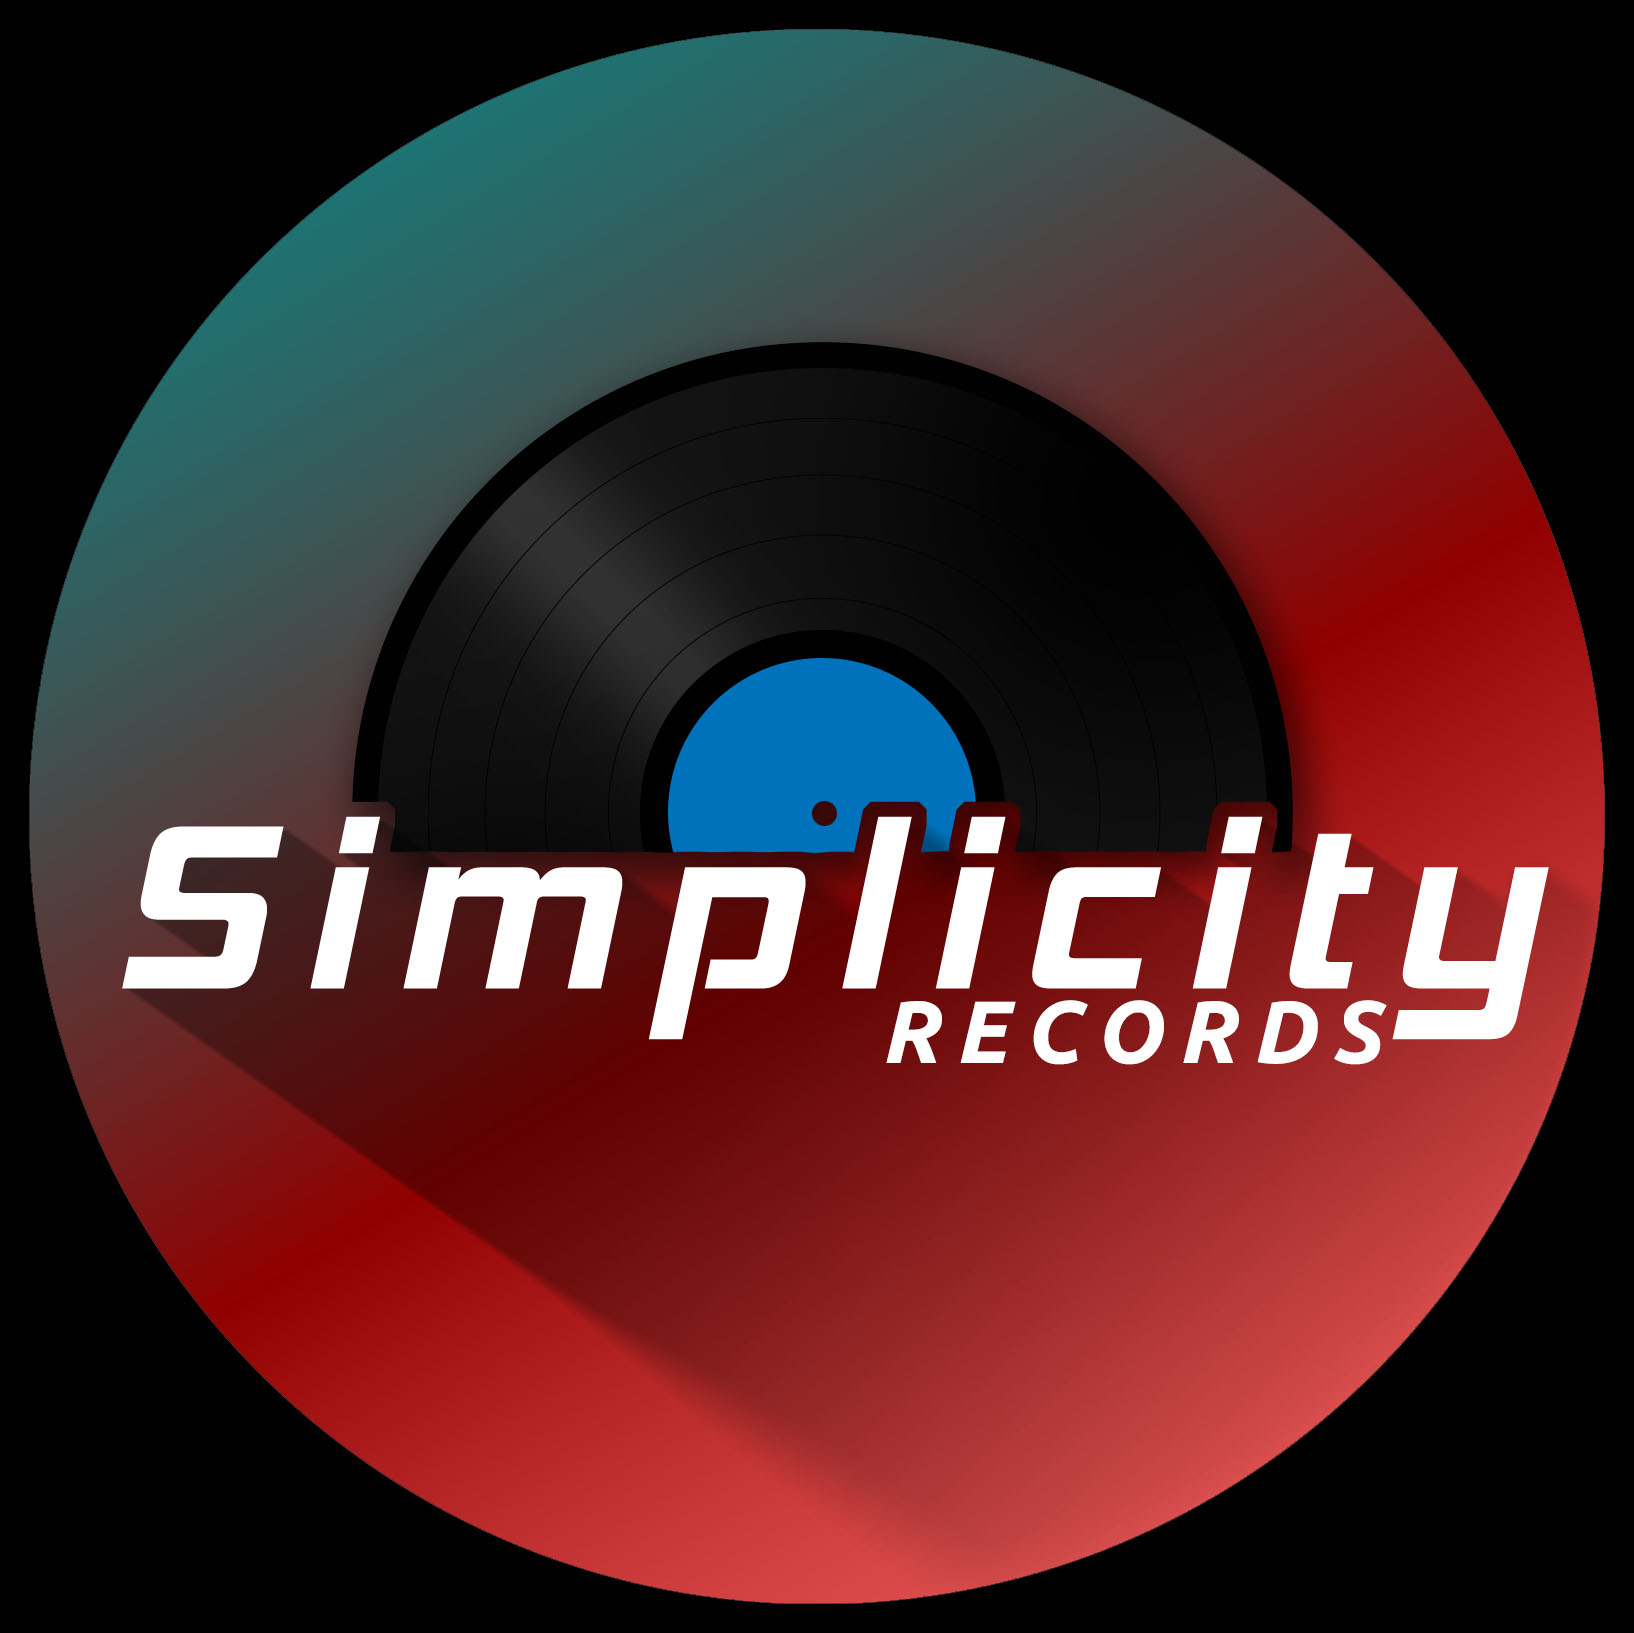 Simplicity Records